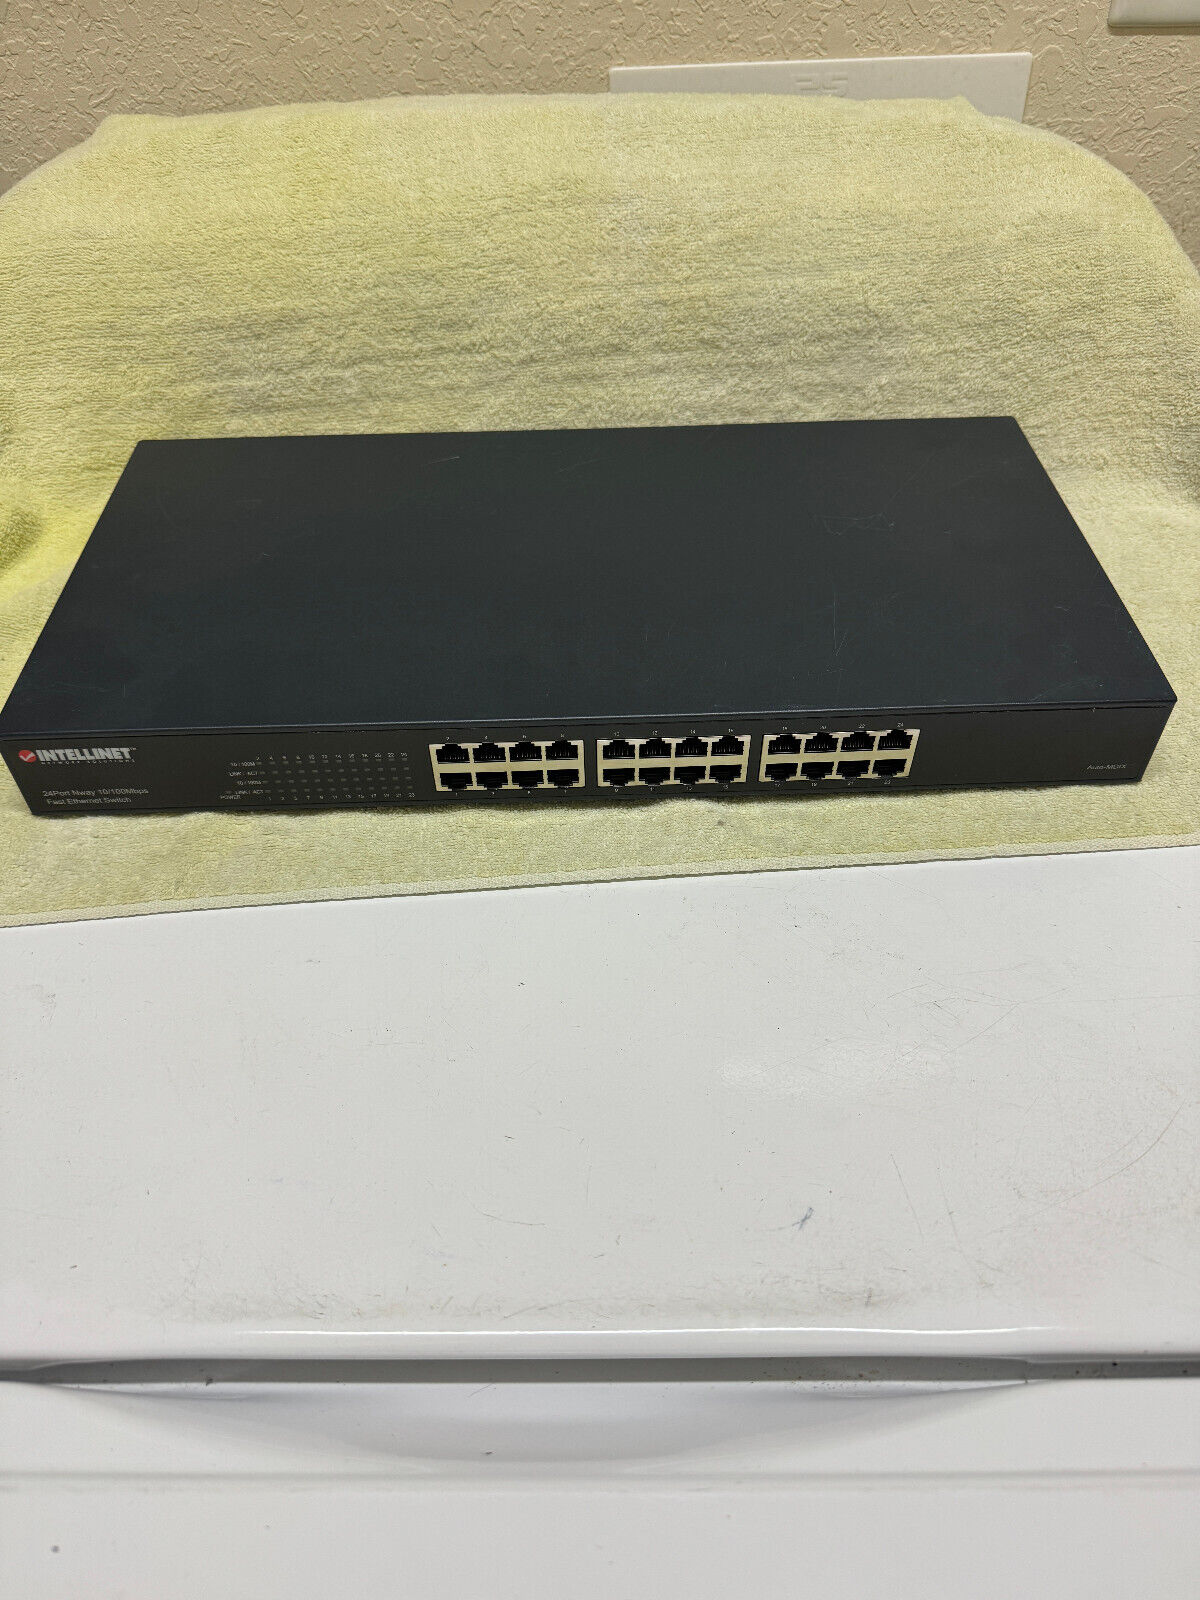 Intellinet 520416 24-Port Switch - PARTS/REPAIR